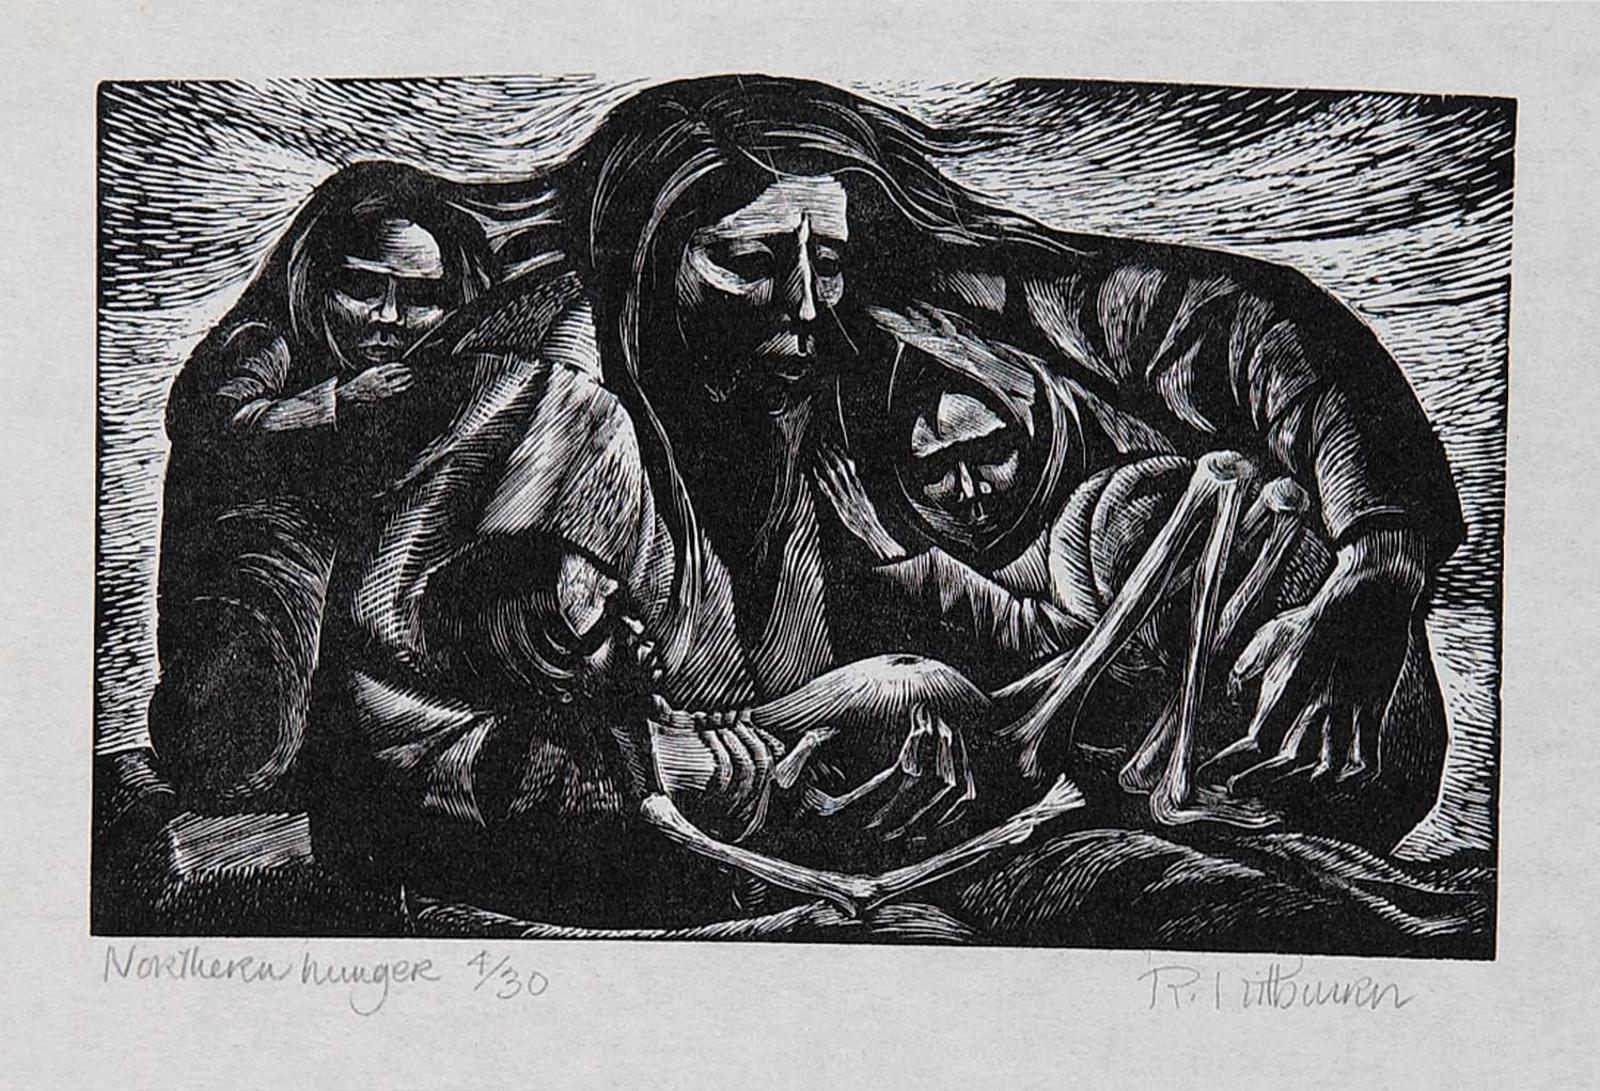 Rosemary Elizabeth Kilbourn (1931) - Northern Hunger  #4/30